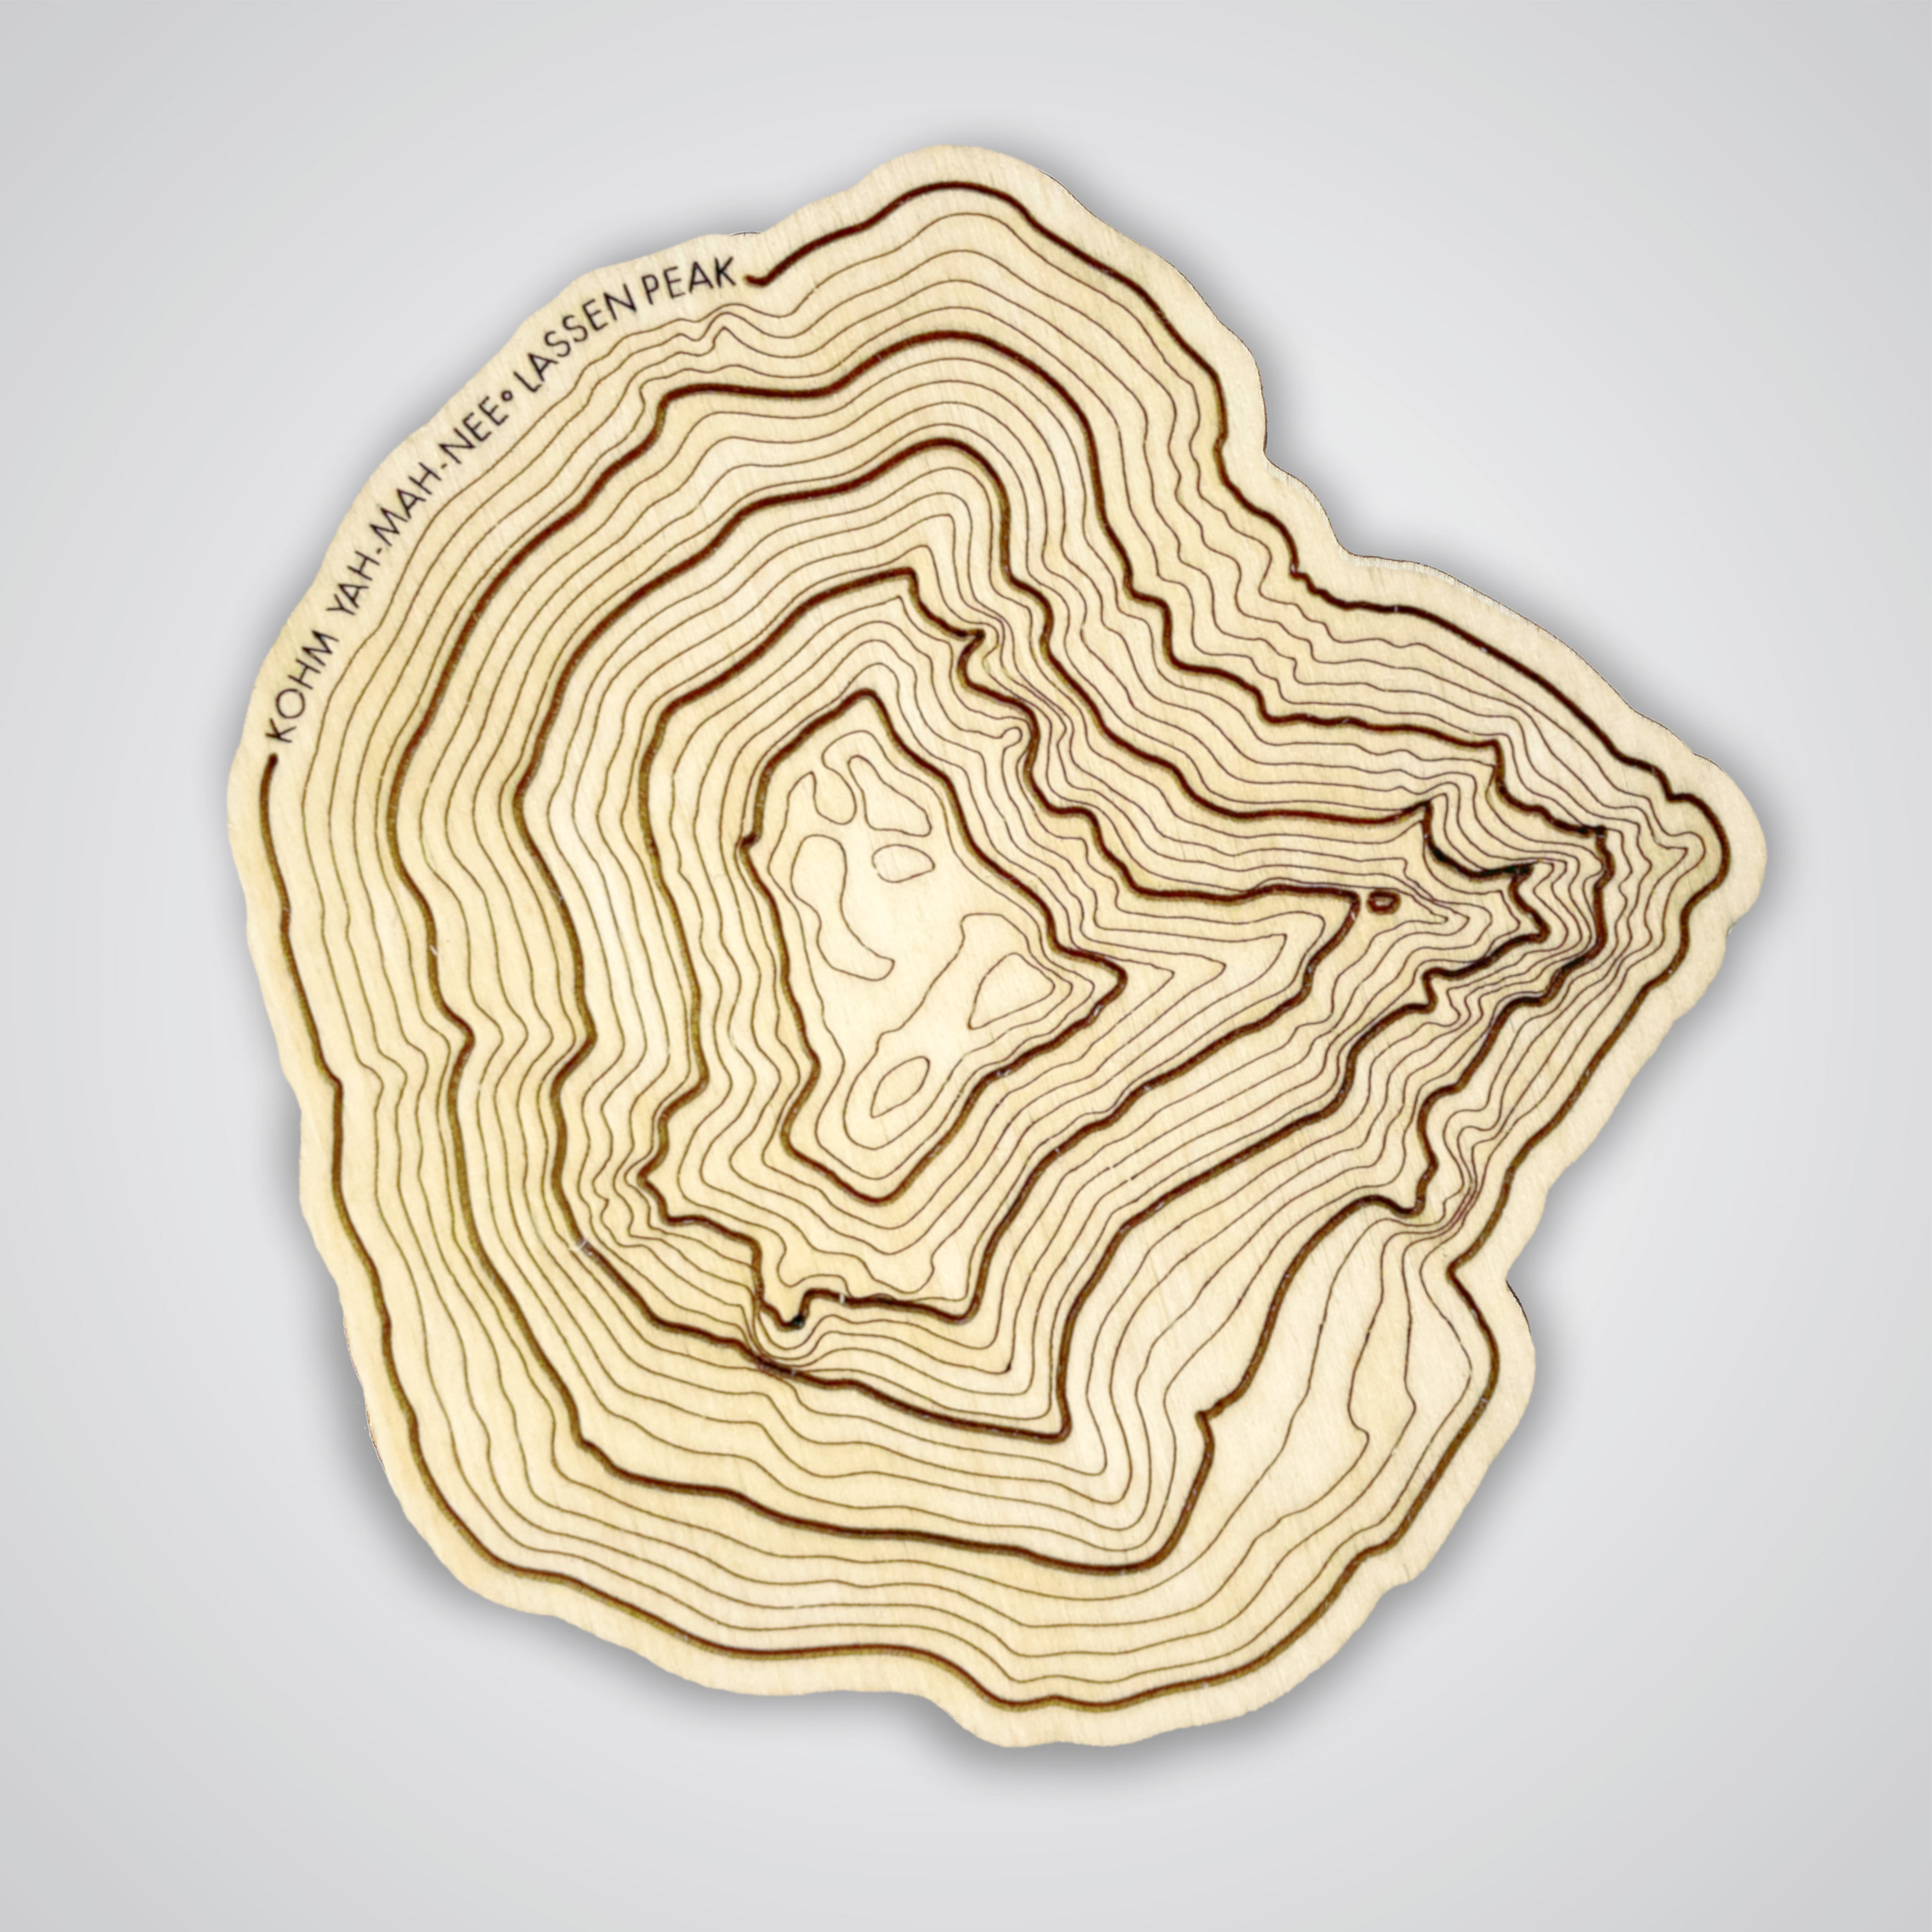 Lassen Peak Topography Coaster - Single